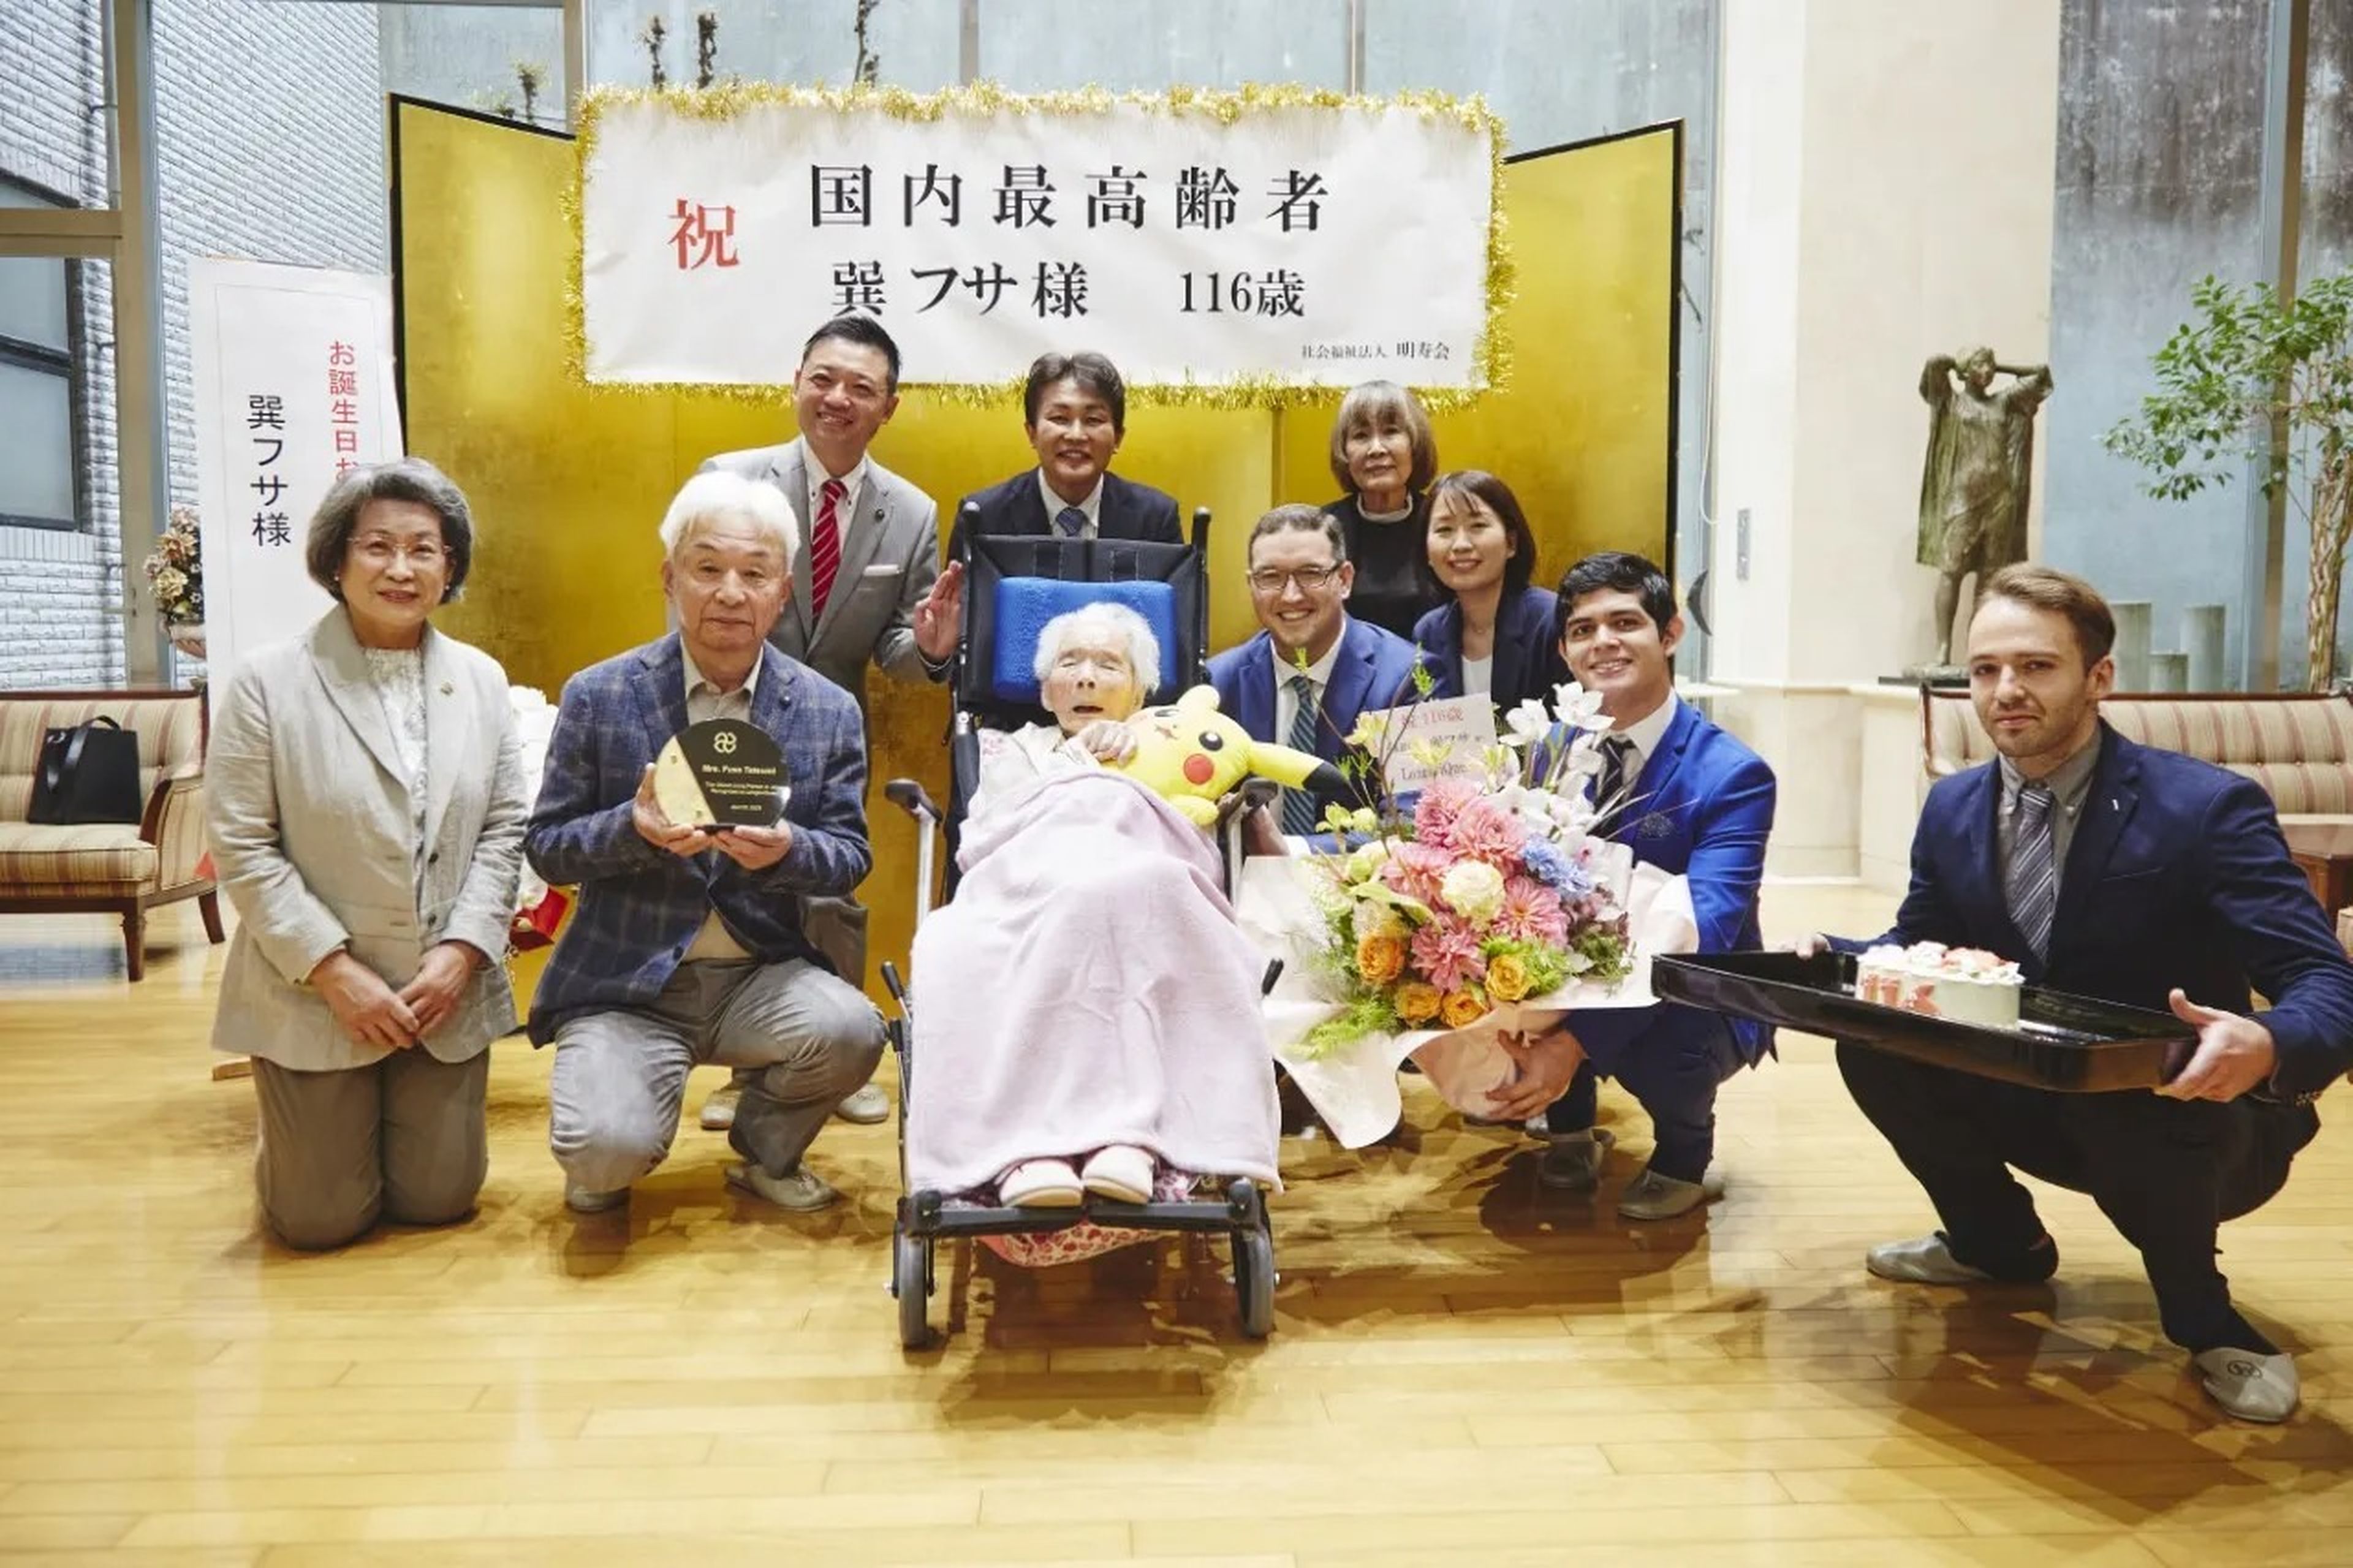 LongeviQuest's Ben Meyers, Yumi Yamamoto, and Fabrizio Villatoro with Japan's oldest person, Fusa Tatsumi on her 116th birthday